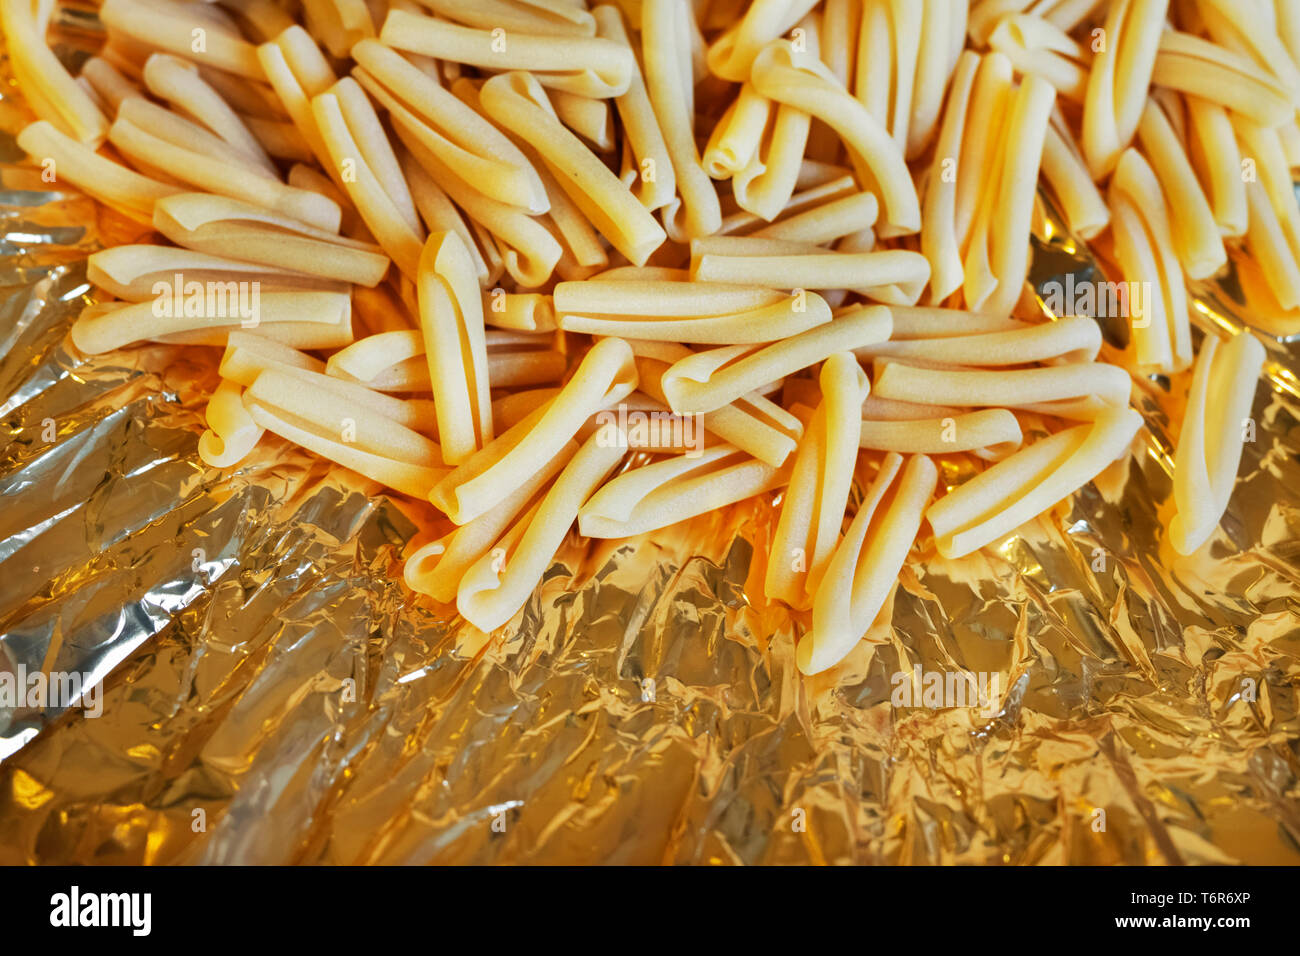 https://c8.alamy.com/comp/T6R6XP/italian-pasta-casarecce-on-a-colored-background-short-and-twist-pasta-shape-T6R6XP.jpg